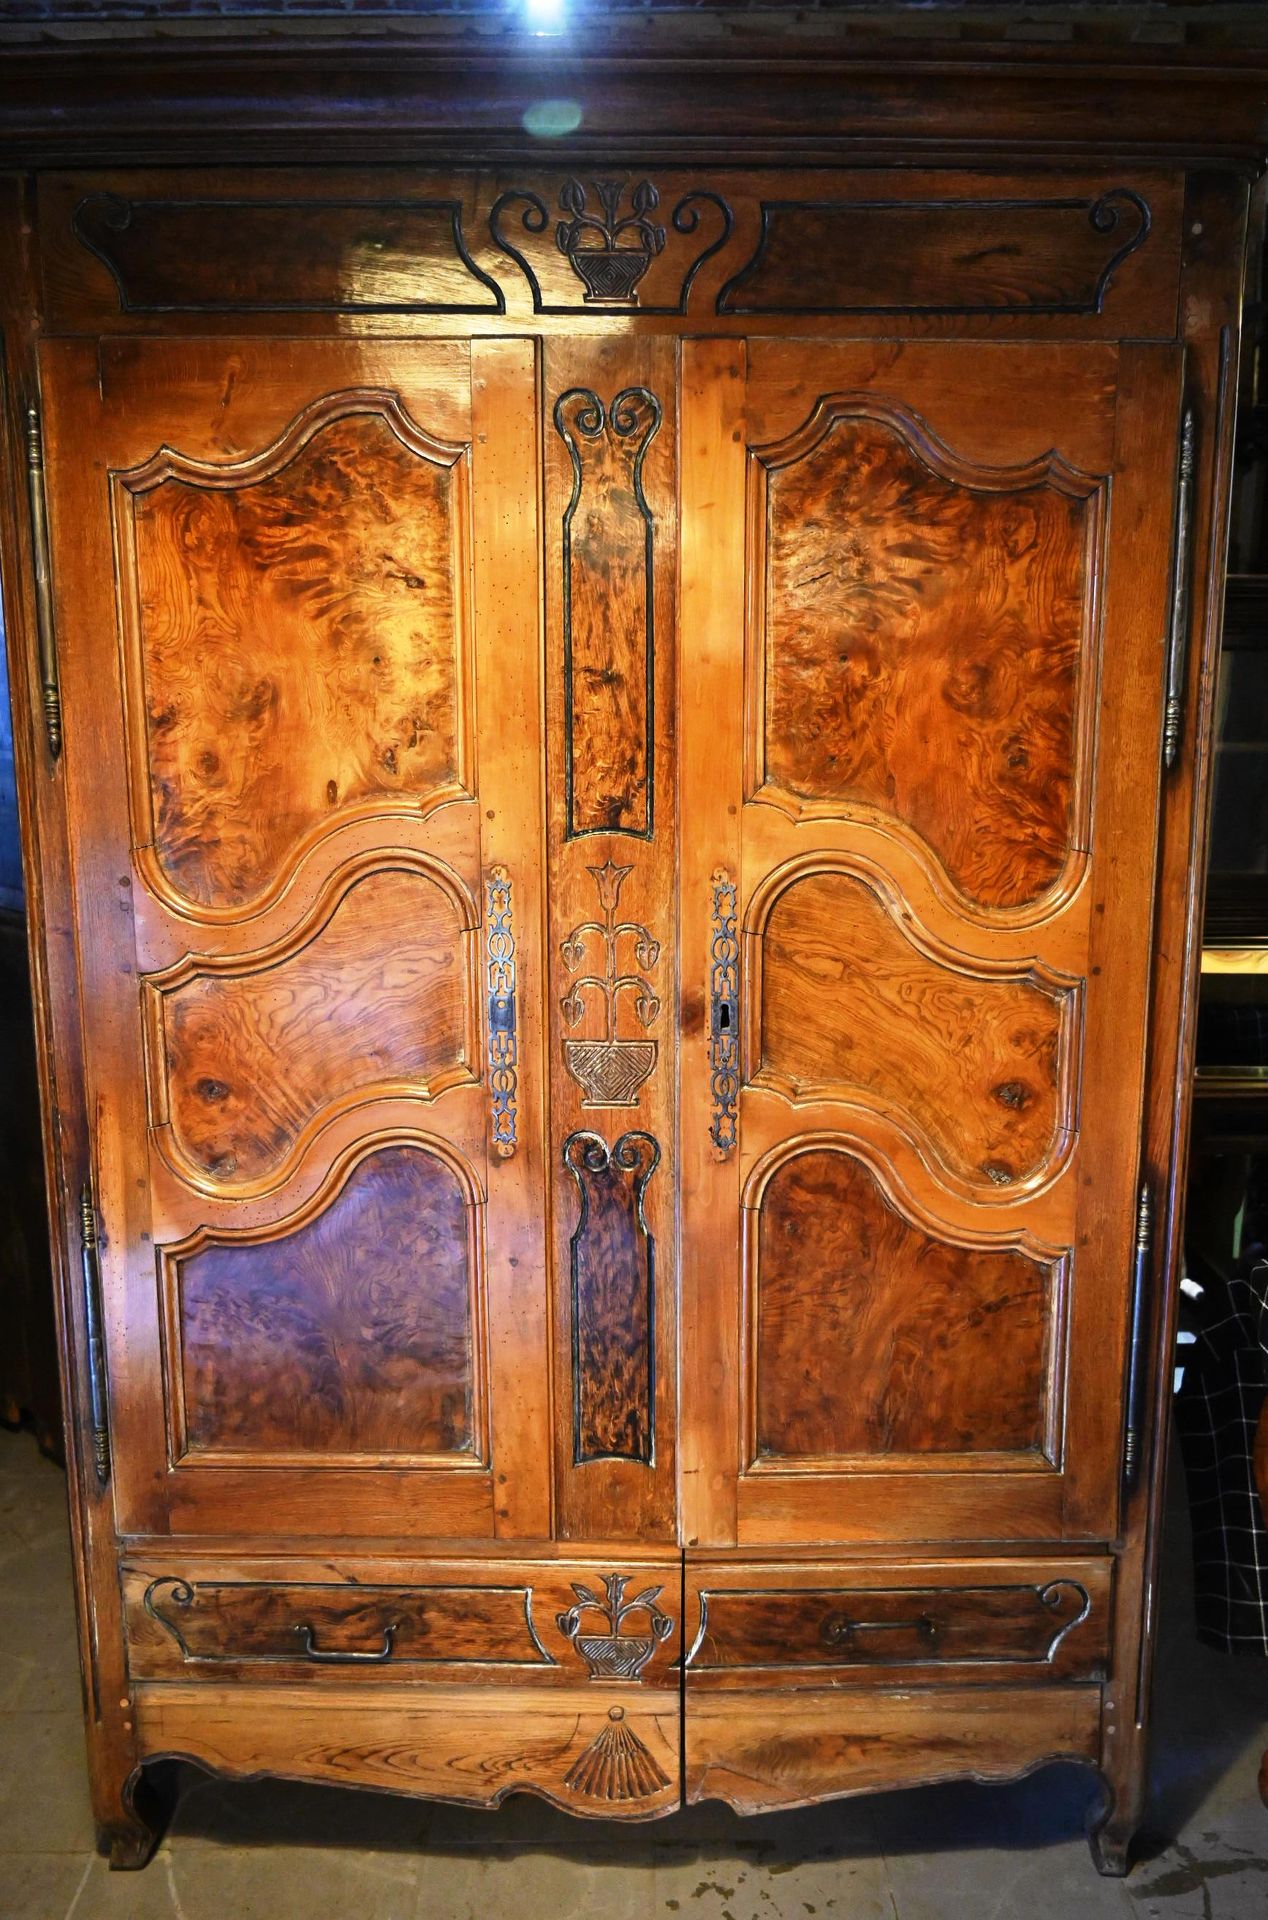 Armoire de mariage en noyer sculpté. 雕刻的胡桃木婚礼柜。

背部和修改。

尺寸：210厘米×140厘米×55厘米